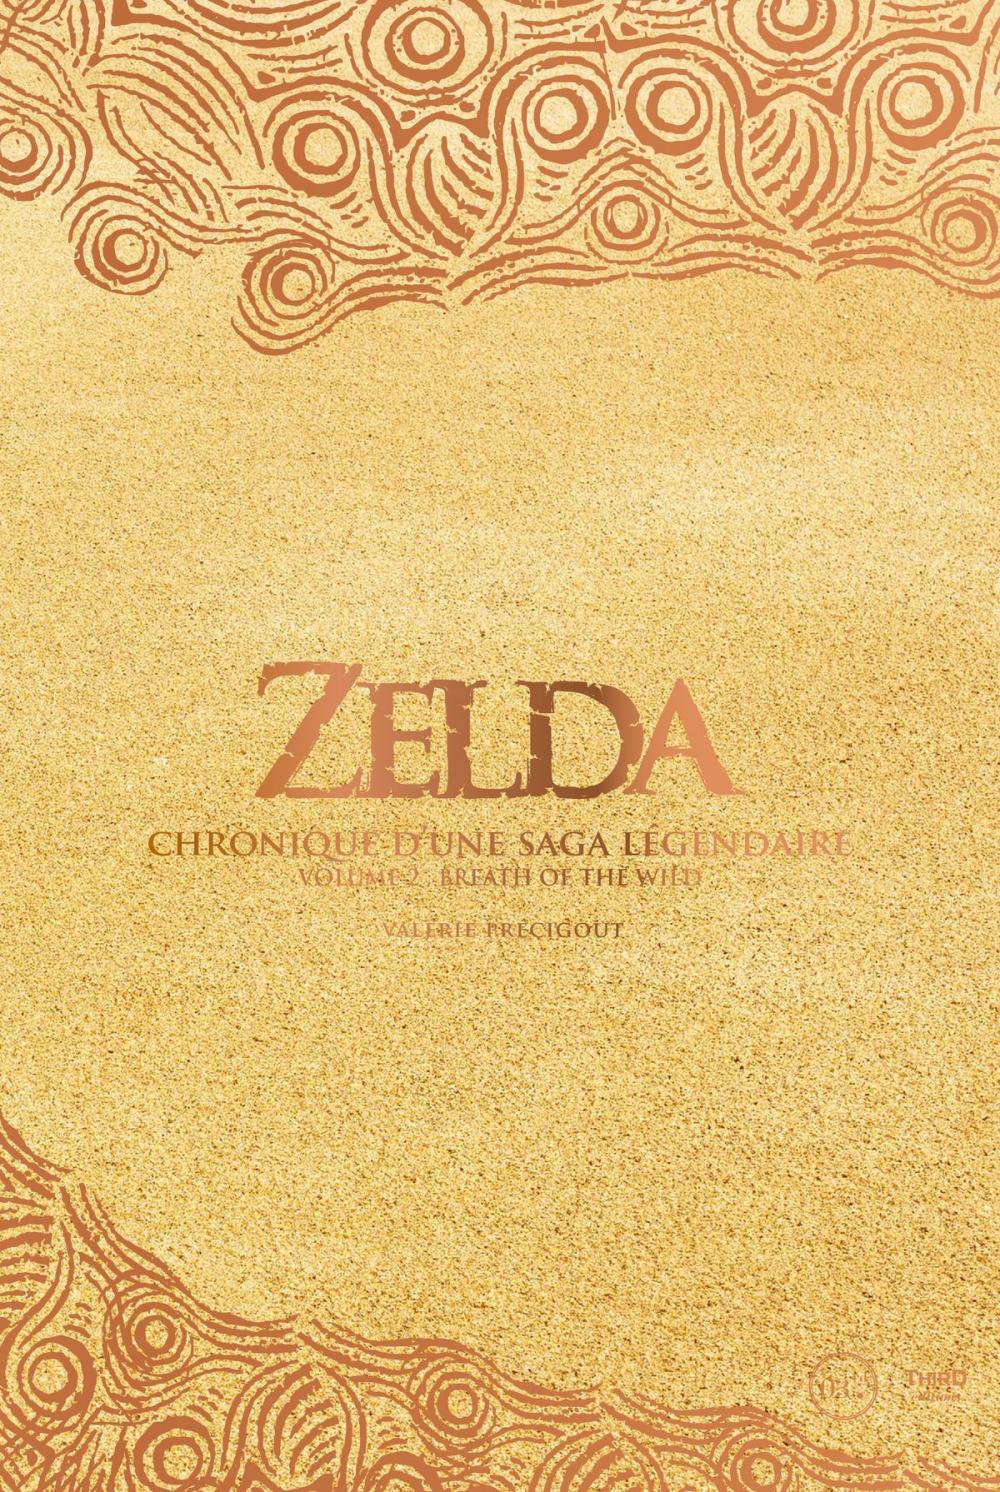 Big bigCover of Zelda - Chronique d'une saga légendaire